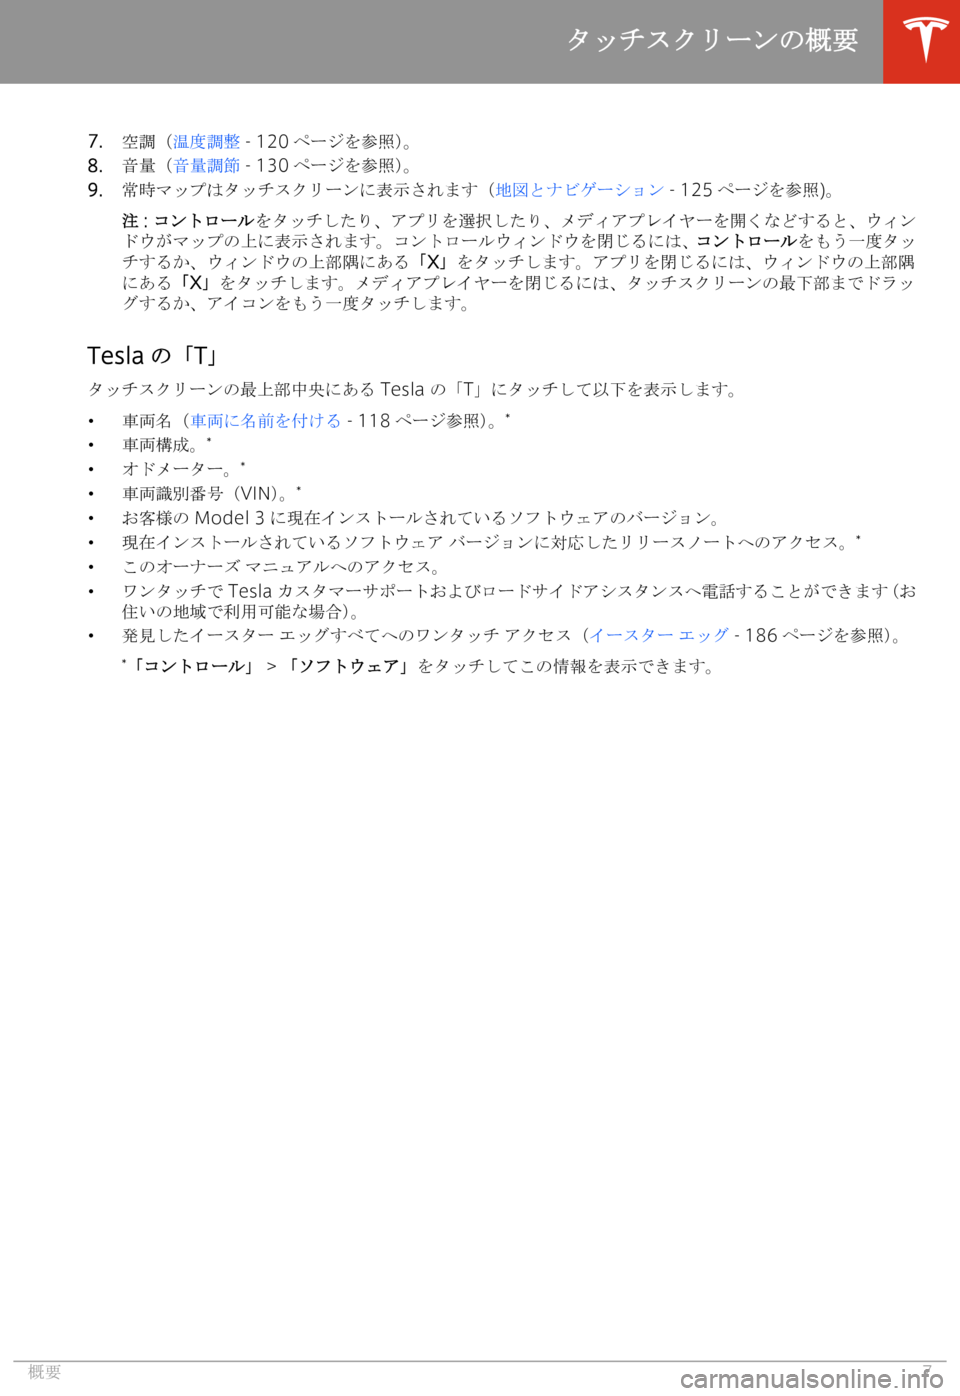 TESLA MODEL 3 2019  取扱説明書 (in Japanese)  �7�.51*>&  